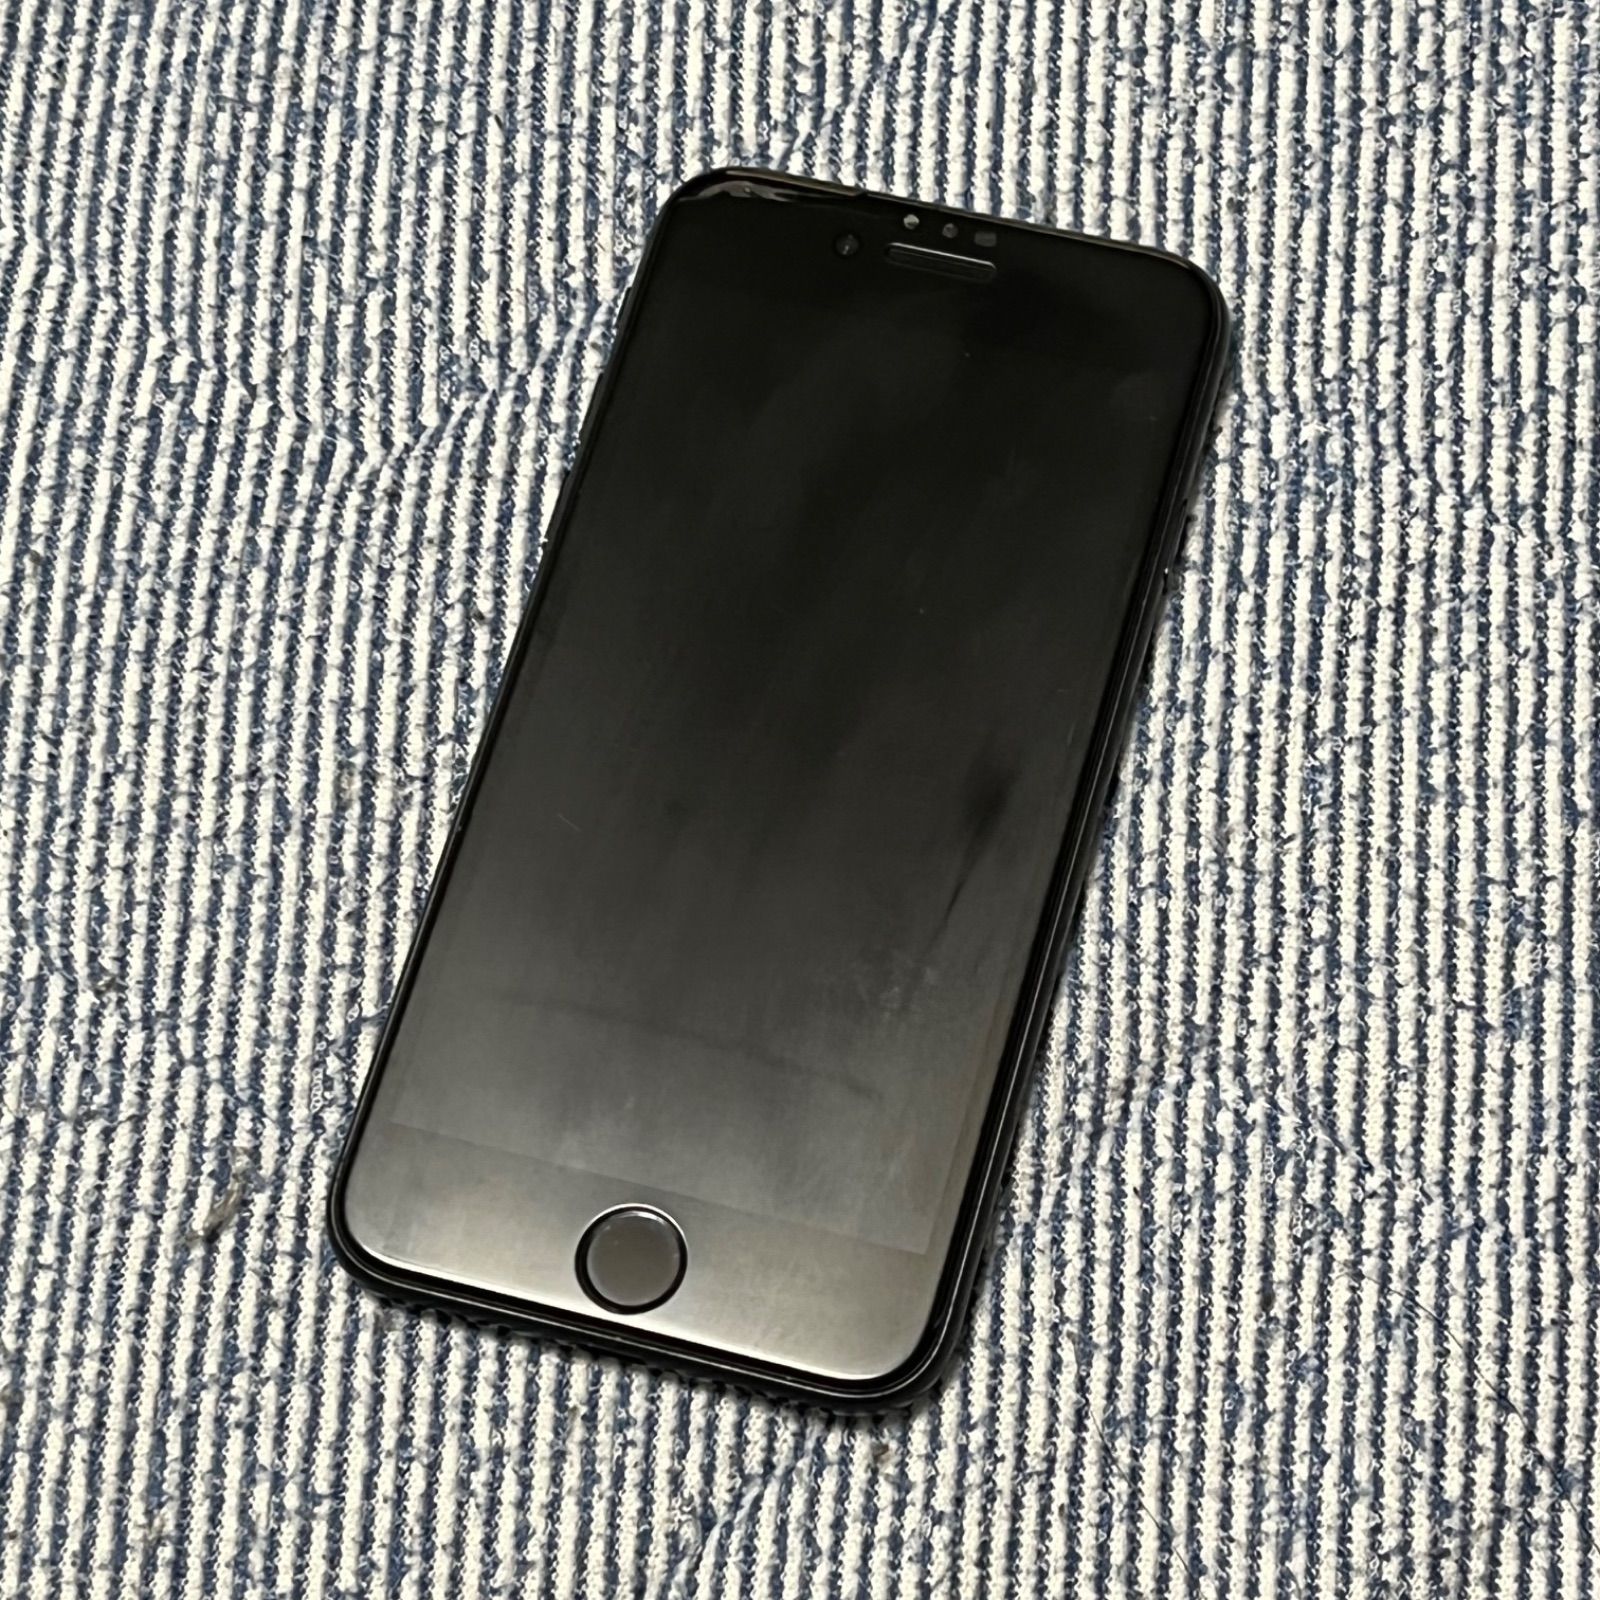 iPhone SE 64GB 黒 SIMロック解除済 保証22/10/9まで - メルカリ